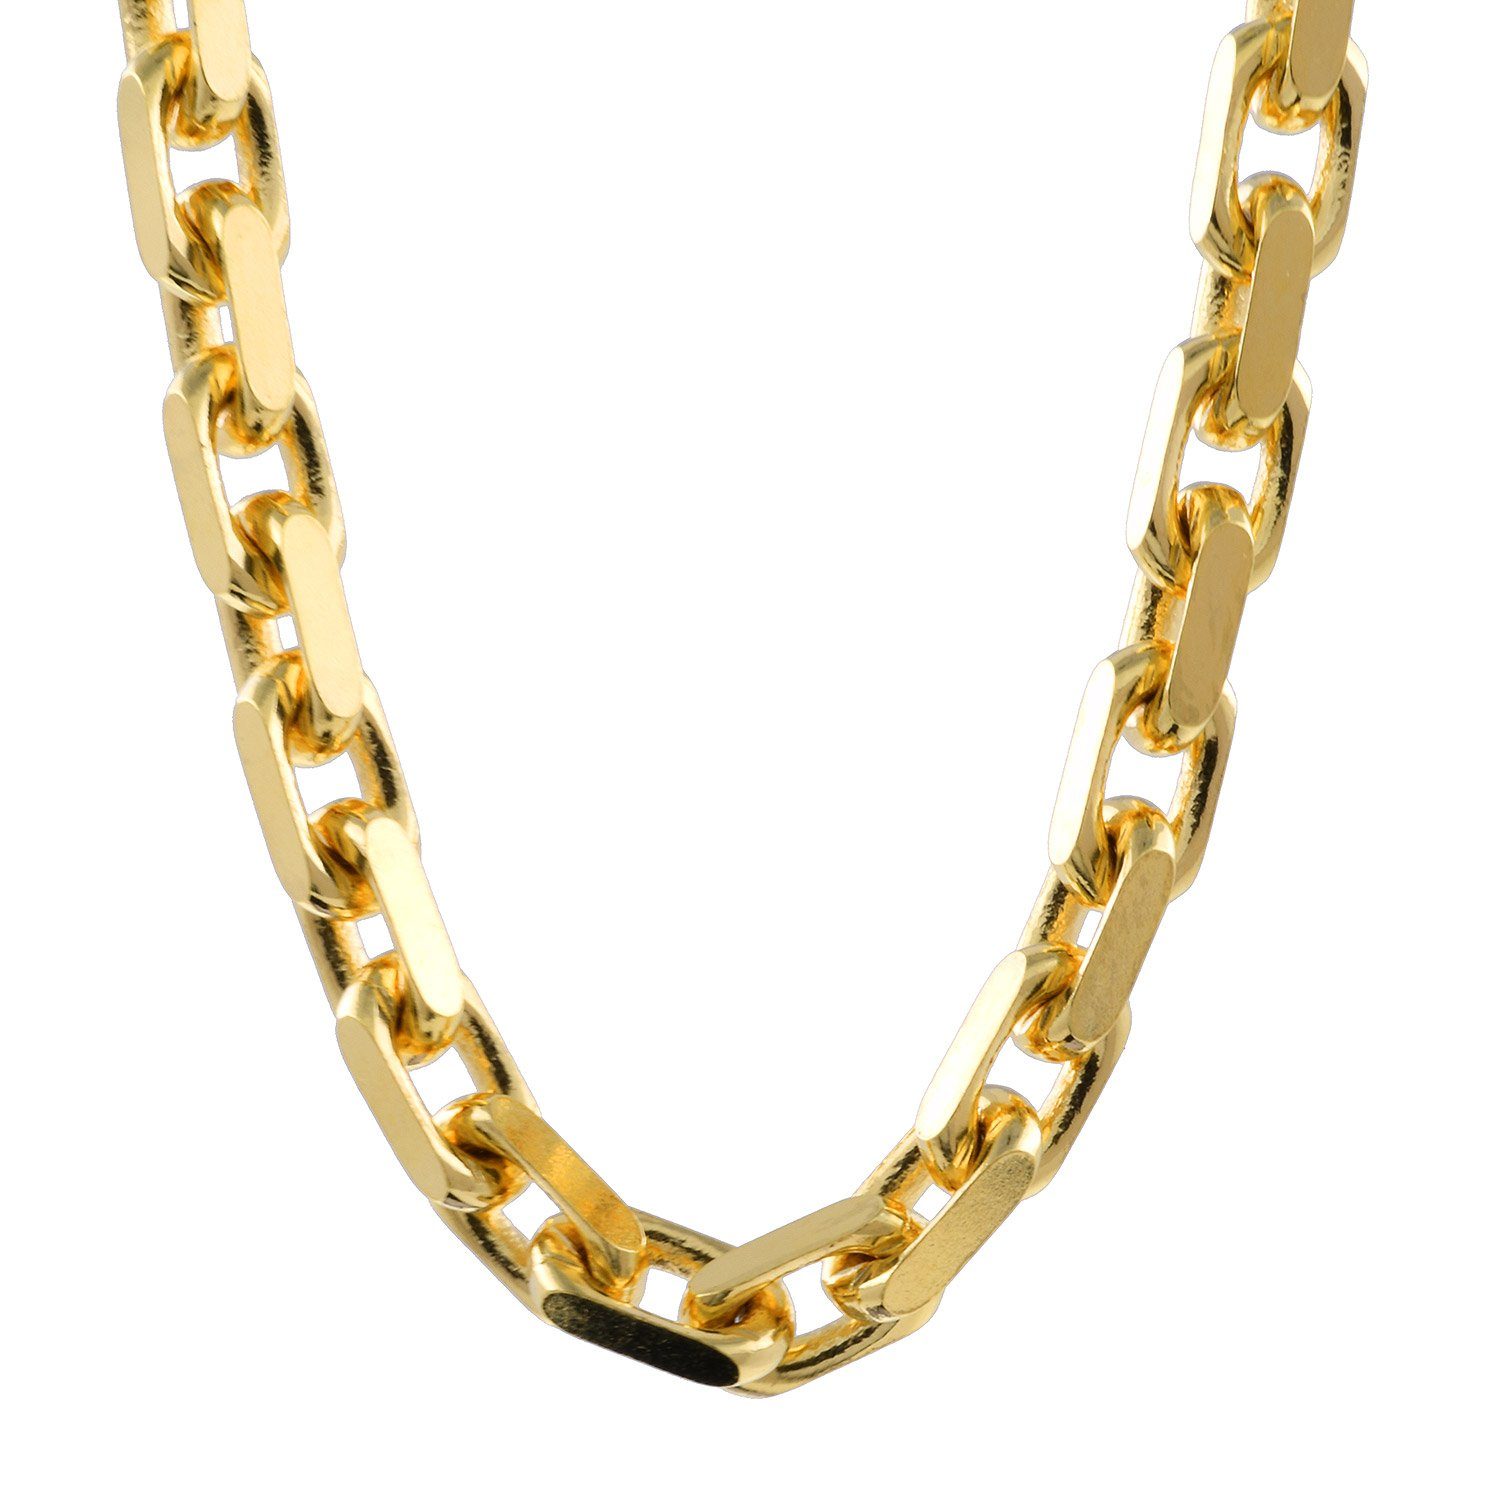 HOPLO Goldkette Ankerkette diamantiert 585 - 14 Karat Gold 7,0 mm 70 cm  Halskette, Made in Germany